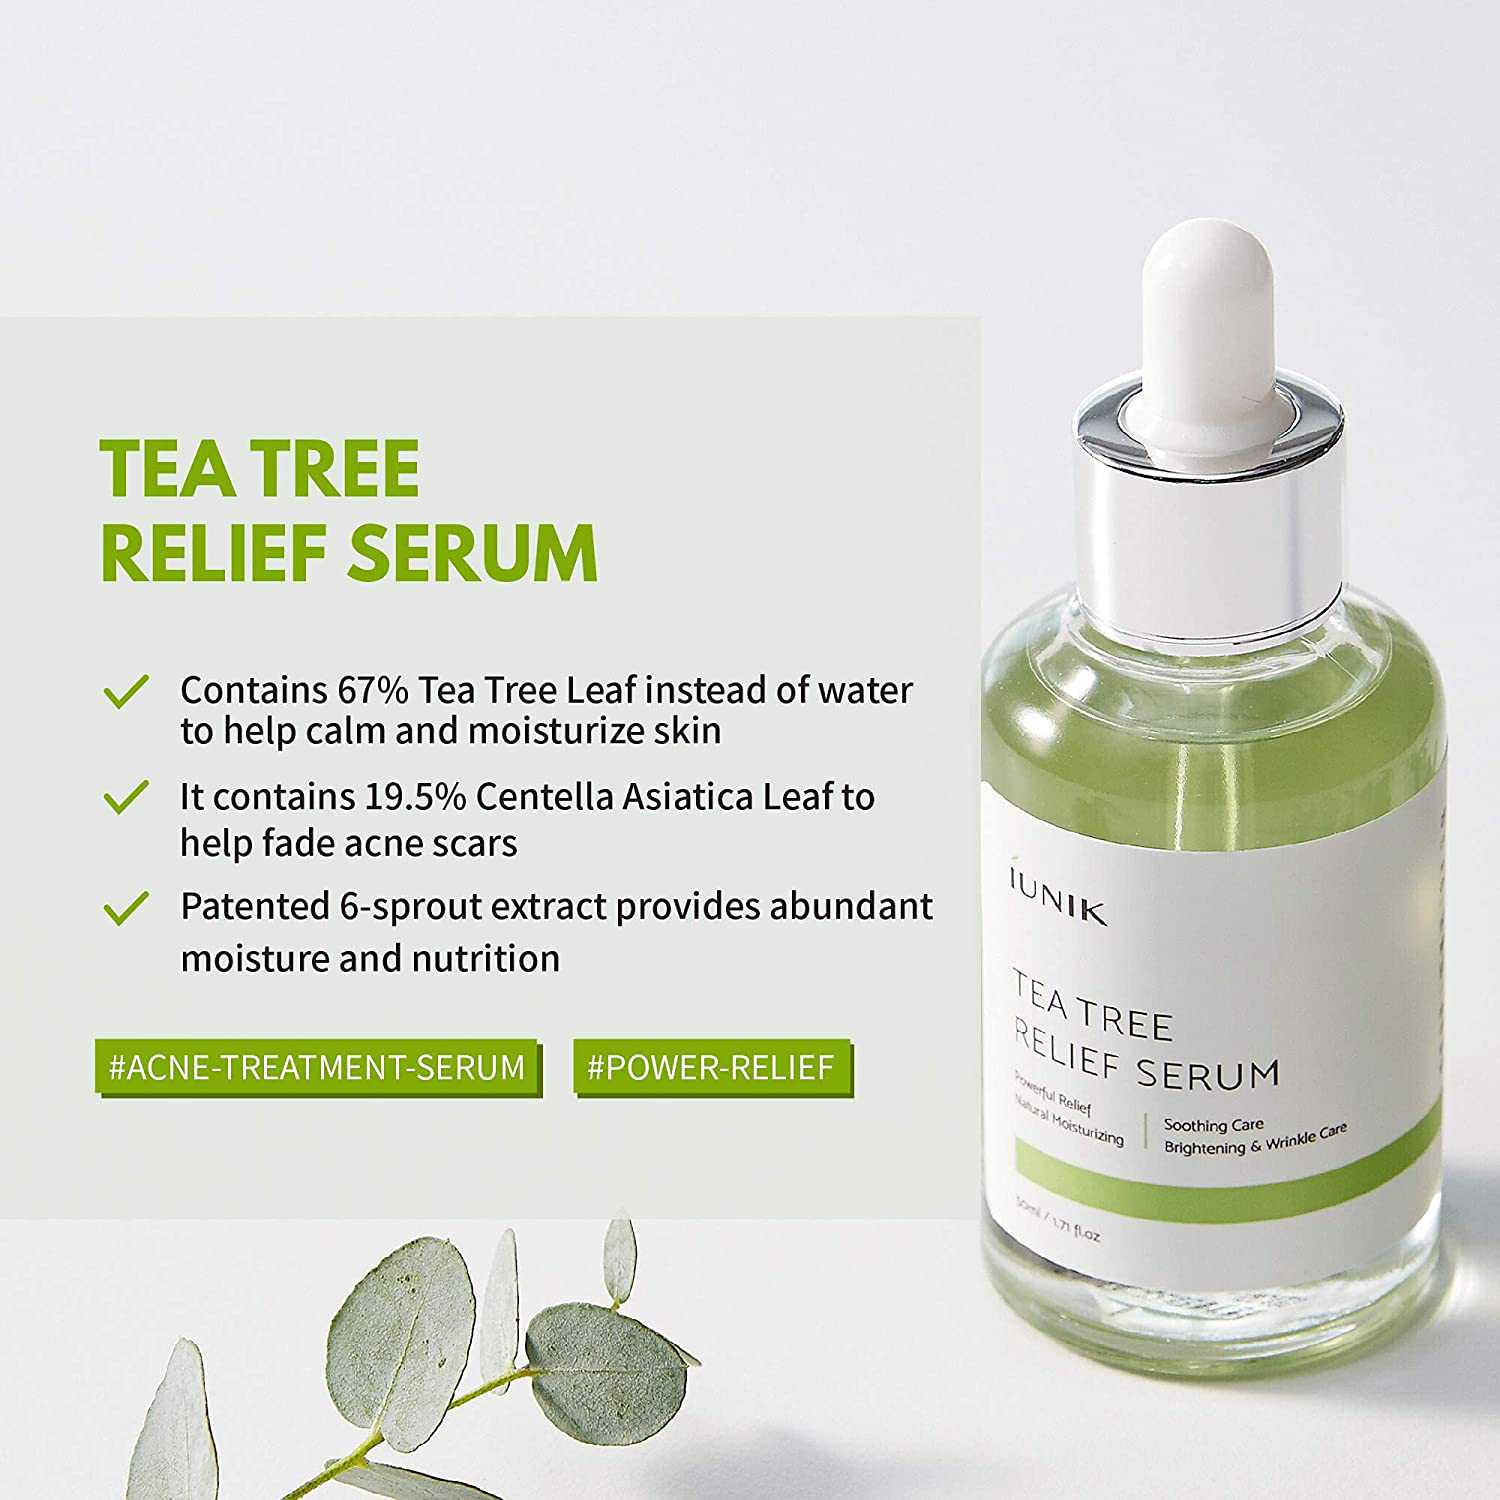 IUNIK Tea Tree Relief Serum